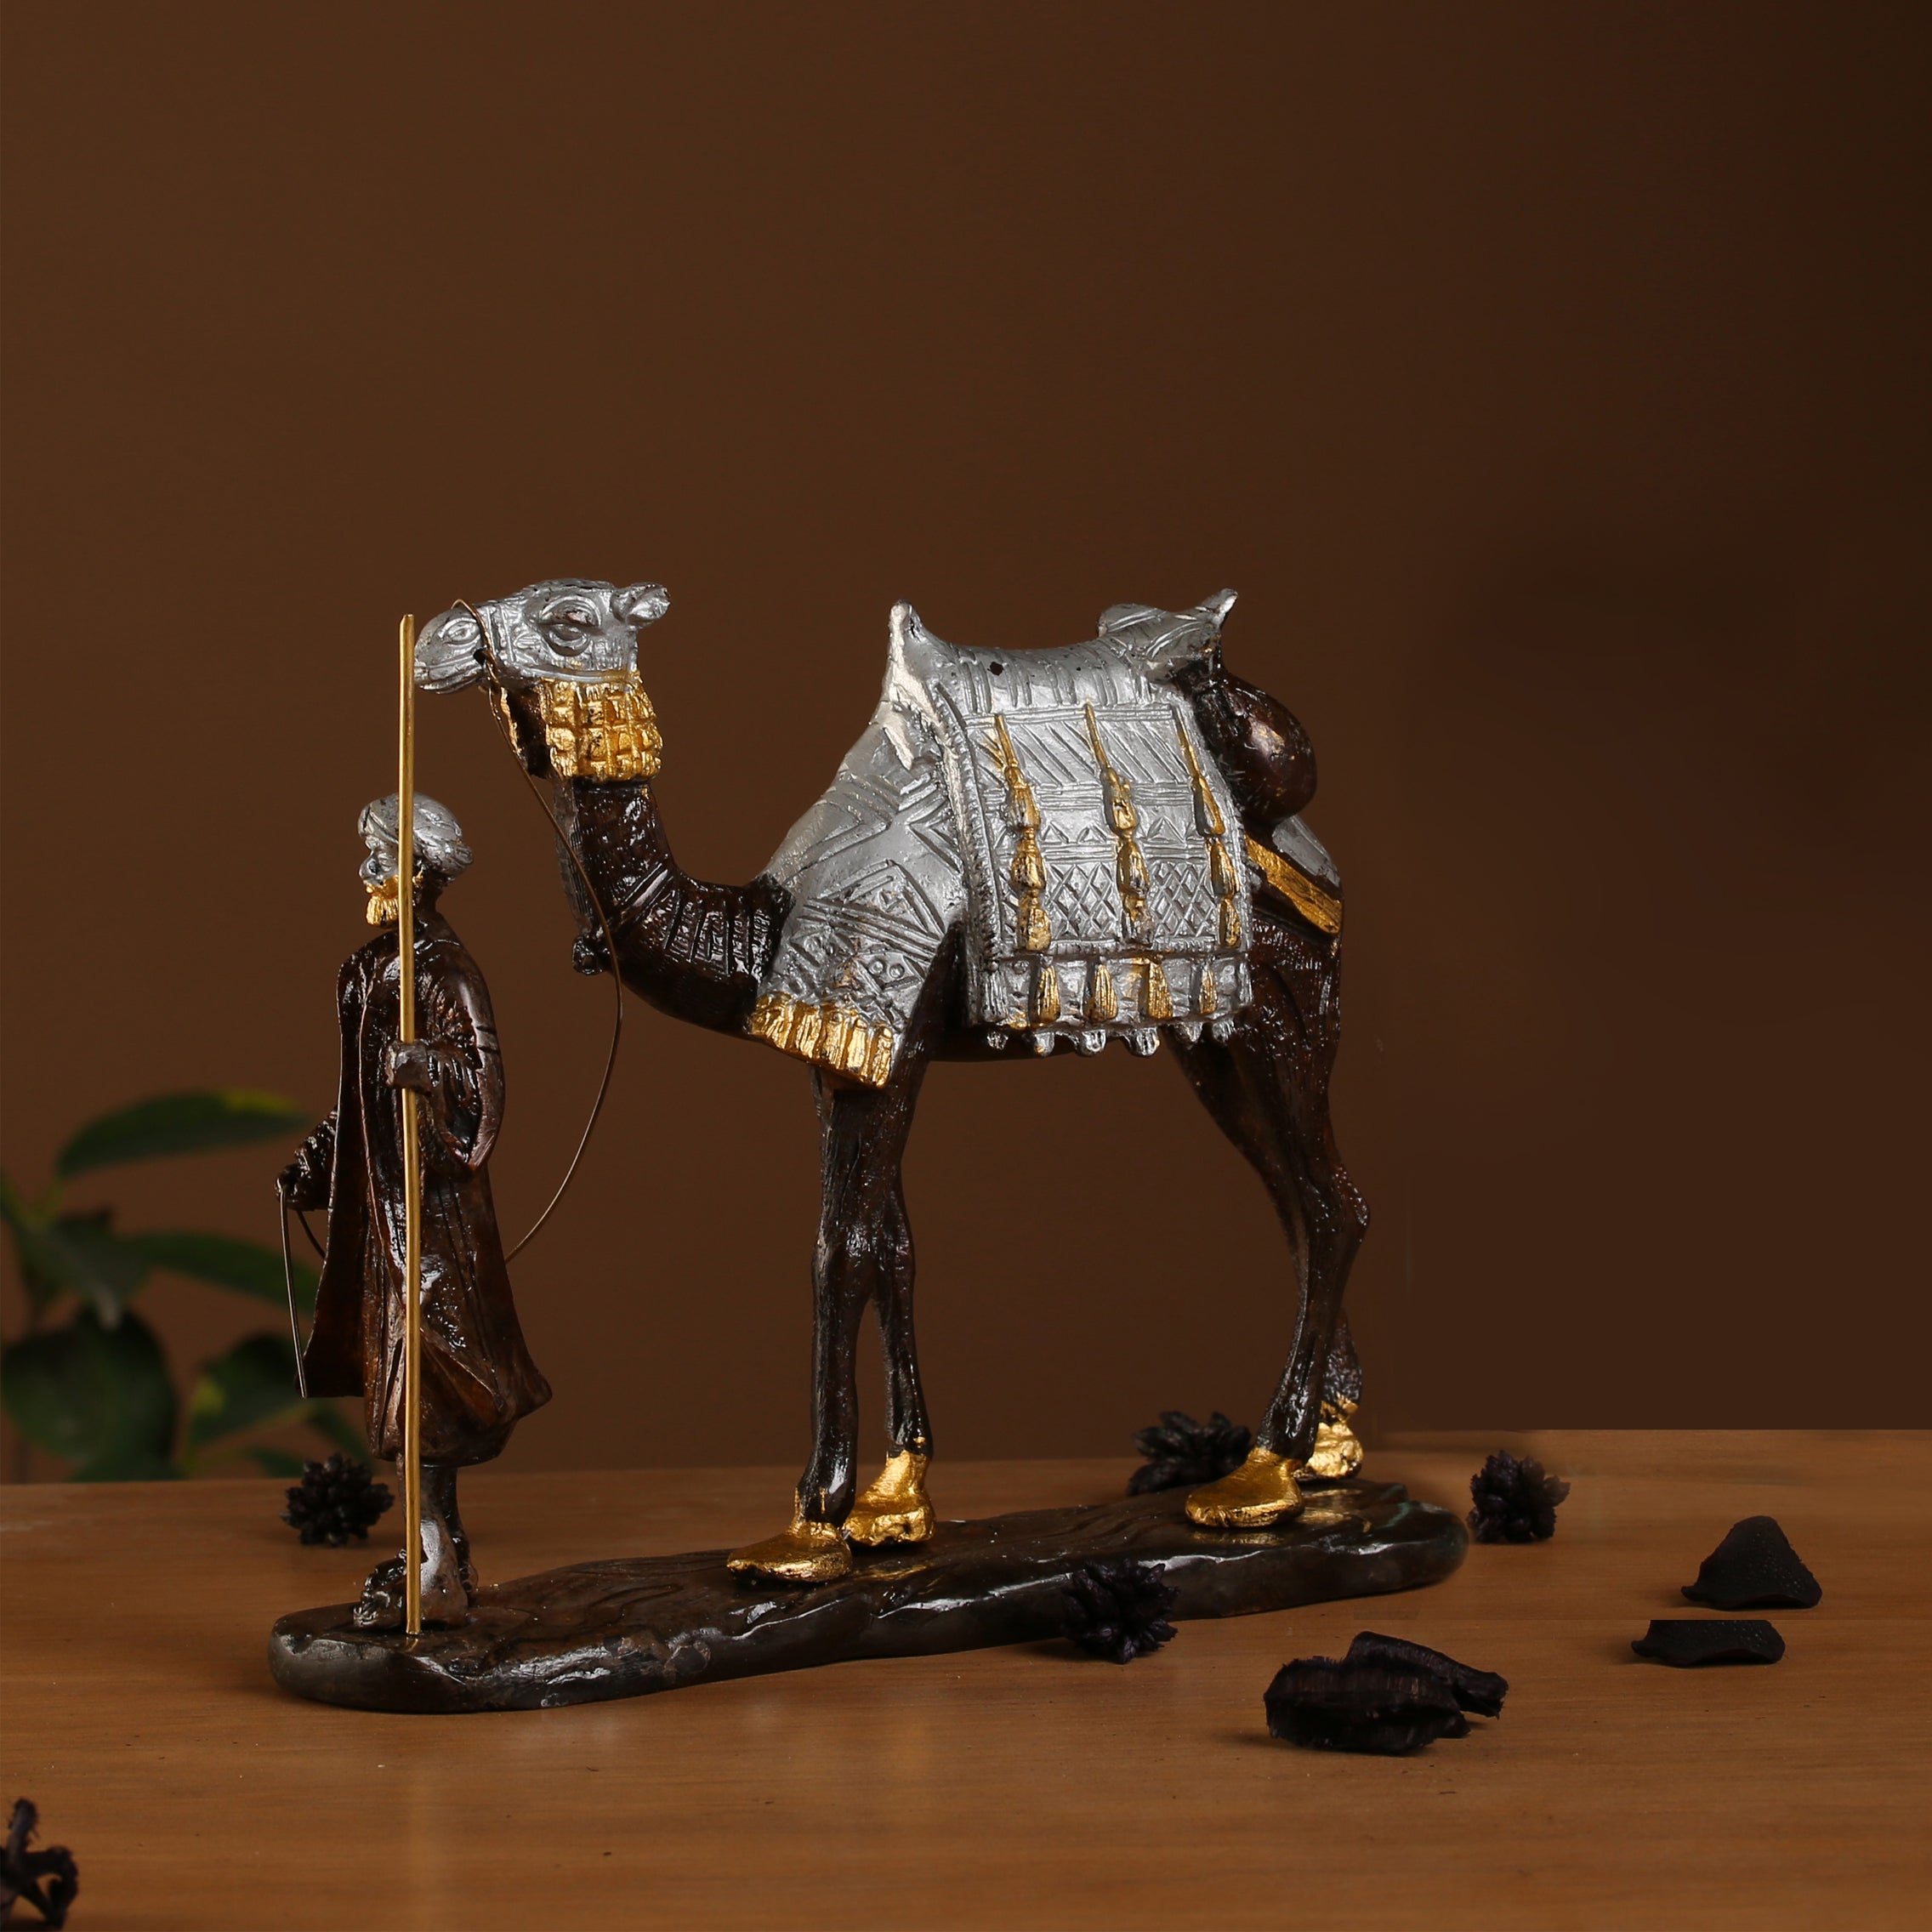 Brass Merchant of Arabia Showpiece, Handcrafted Brass Man with Camel Showpiece